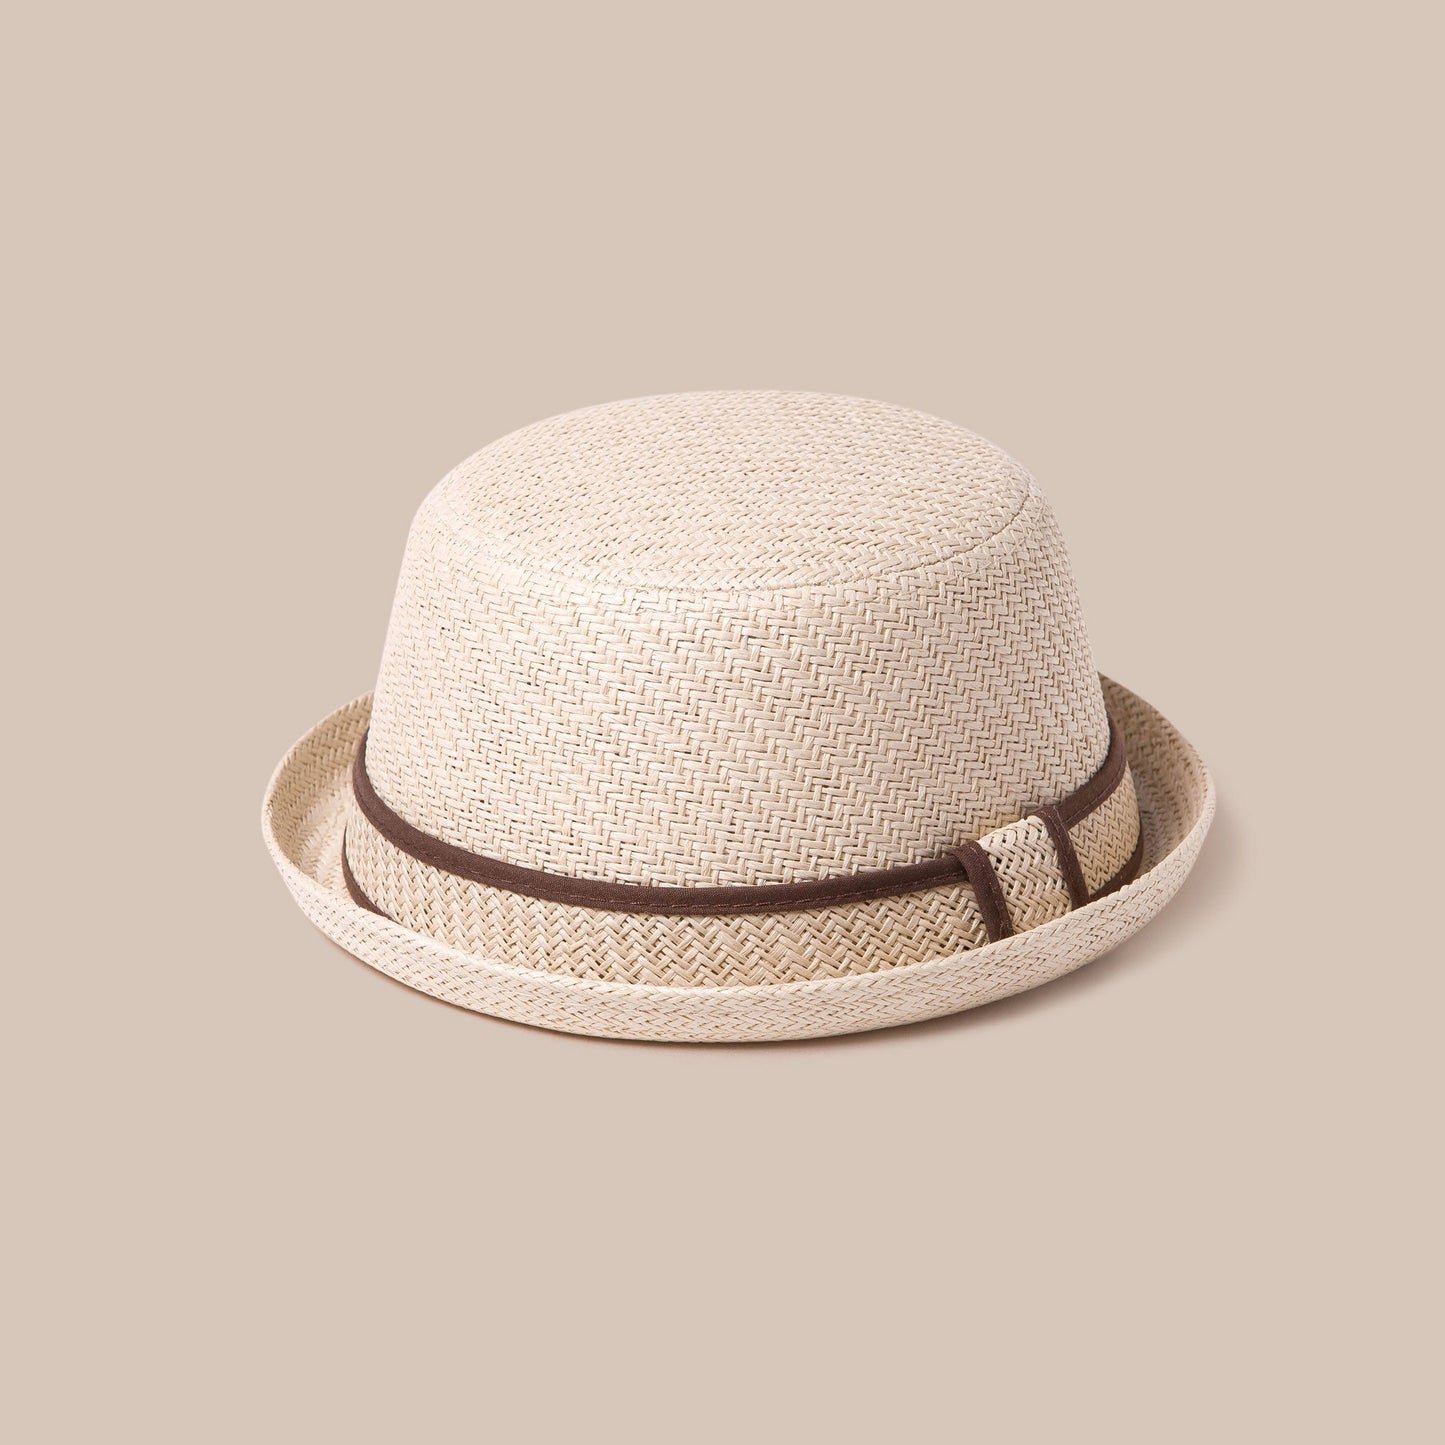 Adjustable Sun Hat Straw Boater Hat White